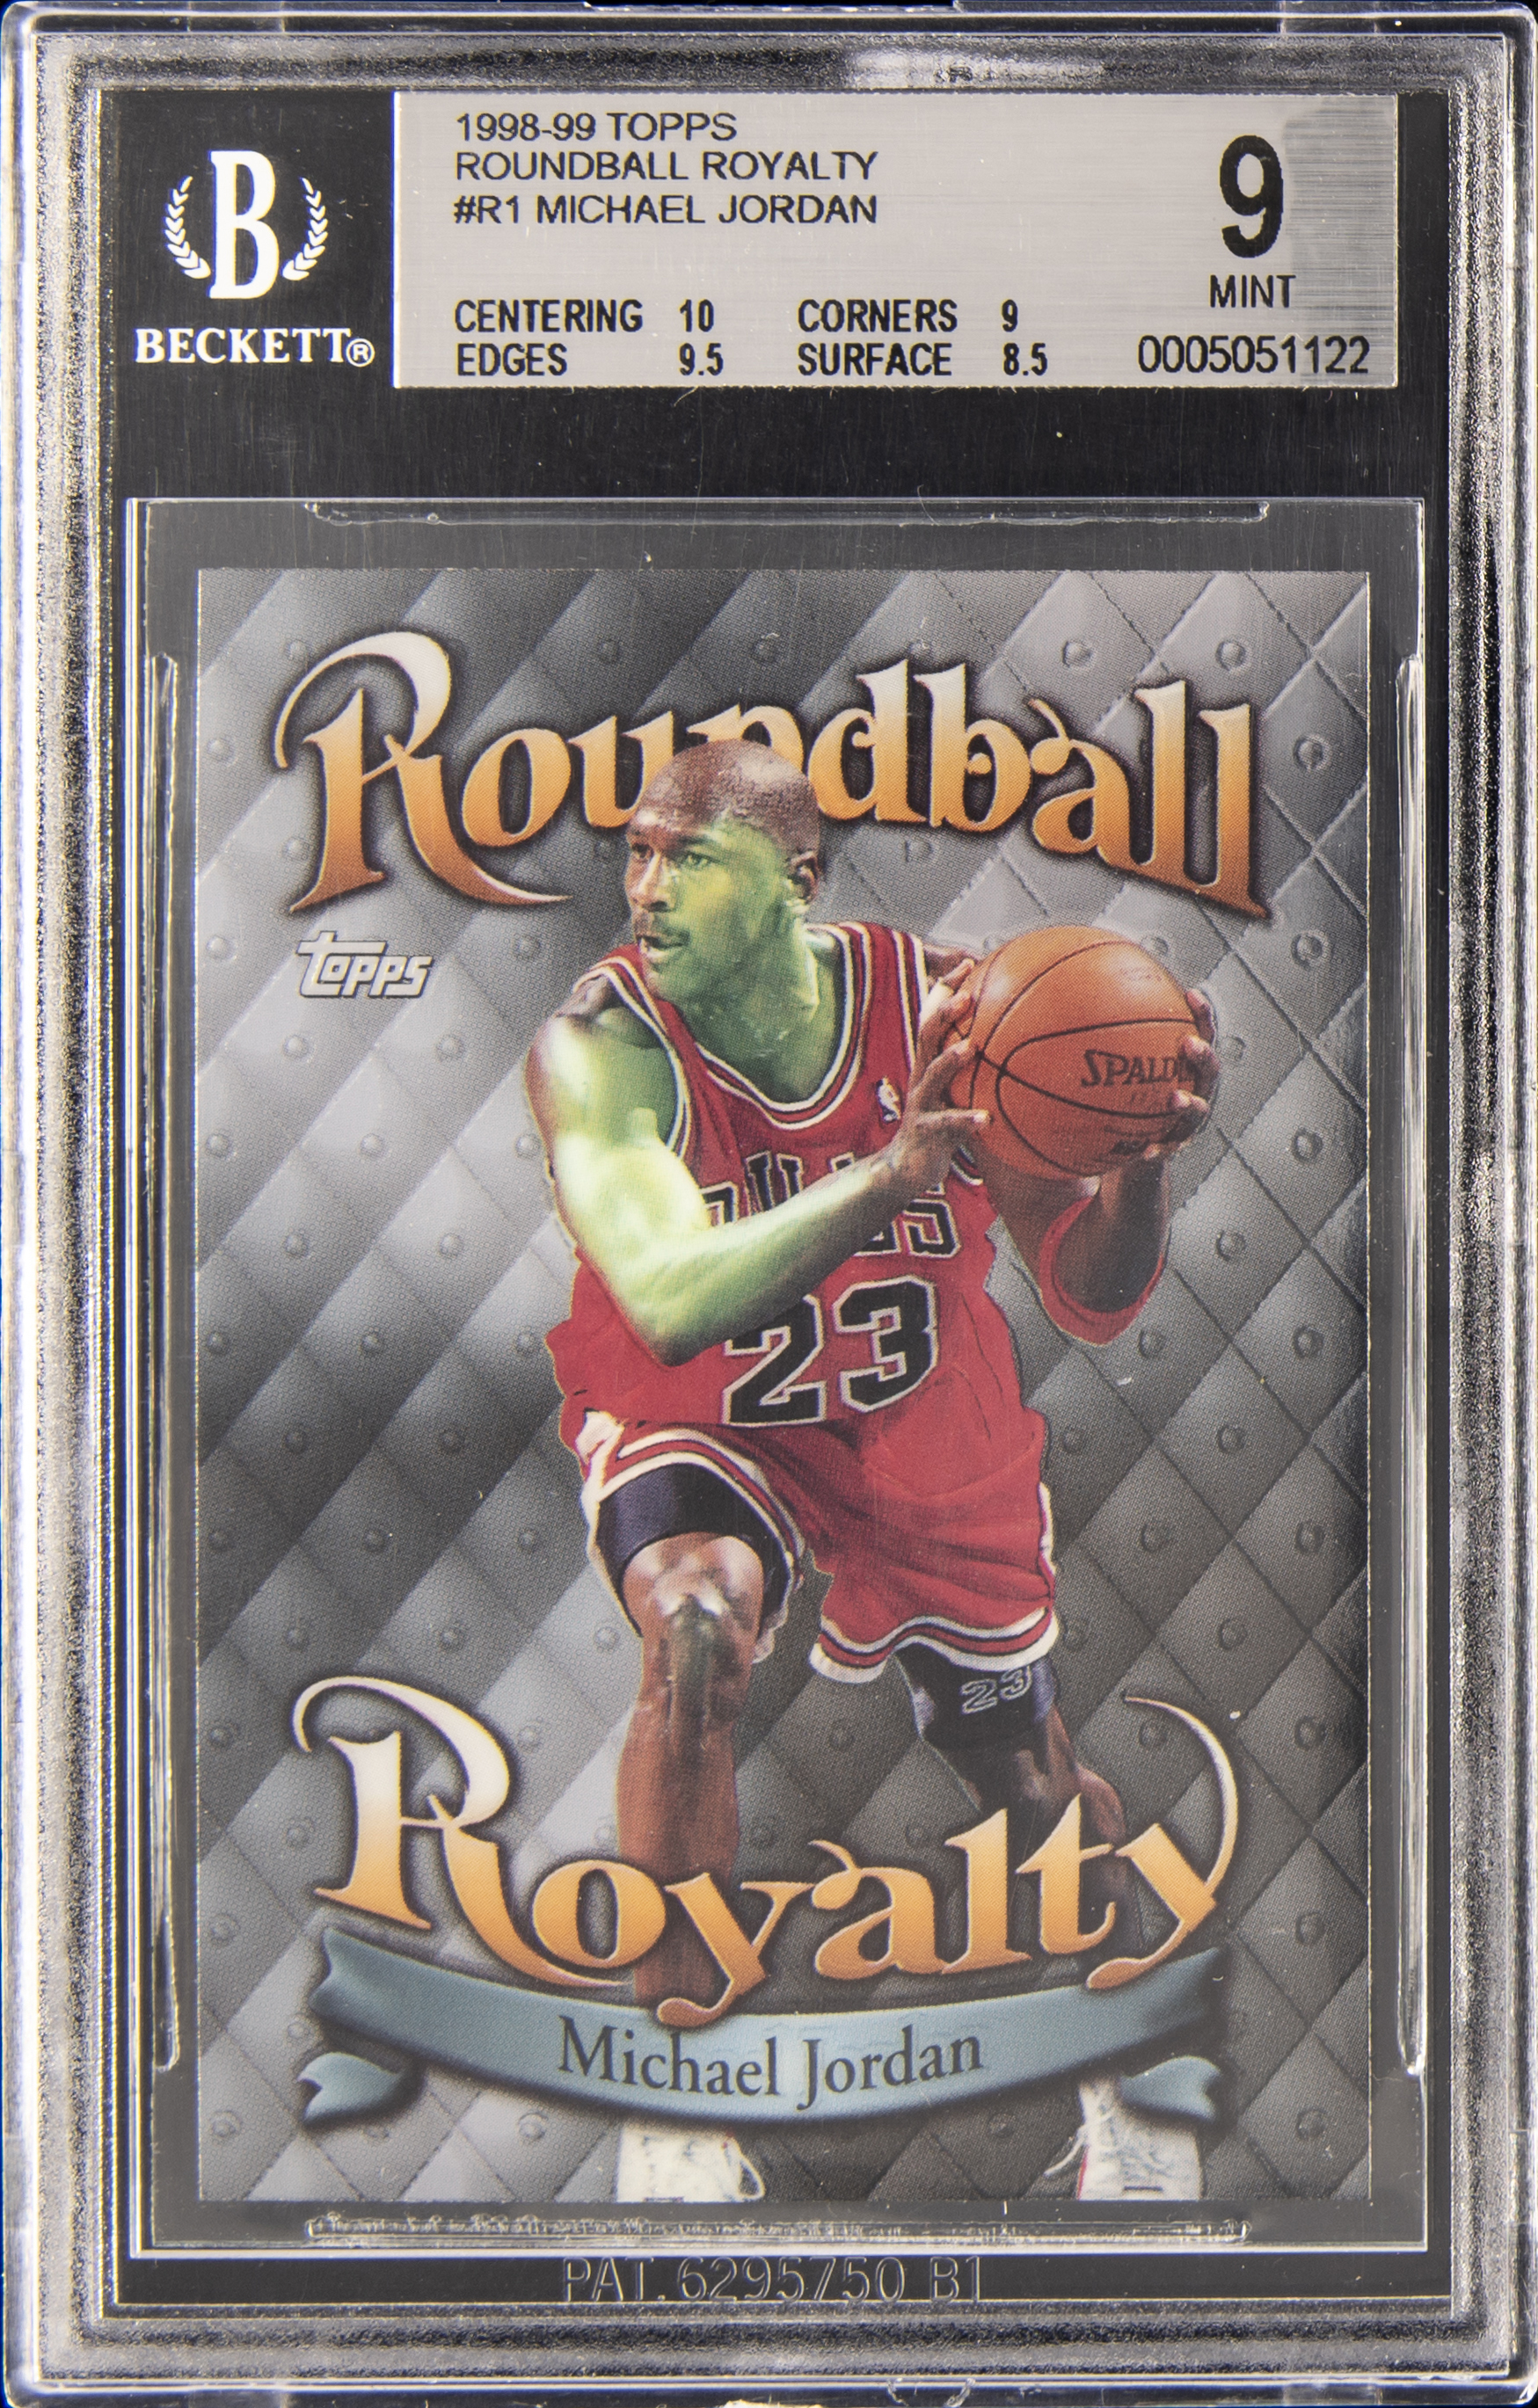 1998-99 Topps Roundball Royalty #R1 Michael Jordan – BGS MINT 9